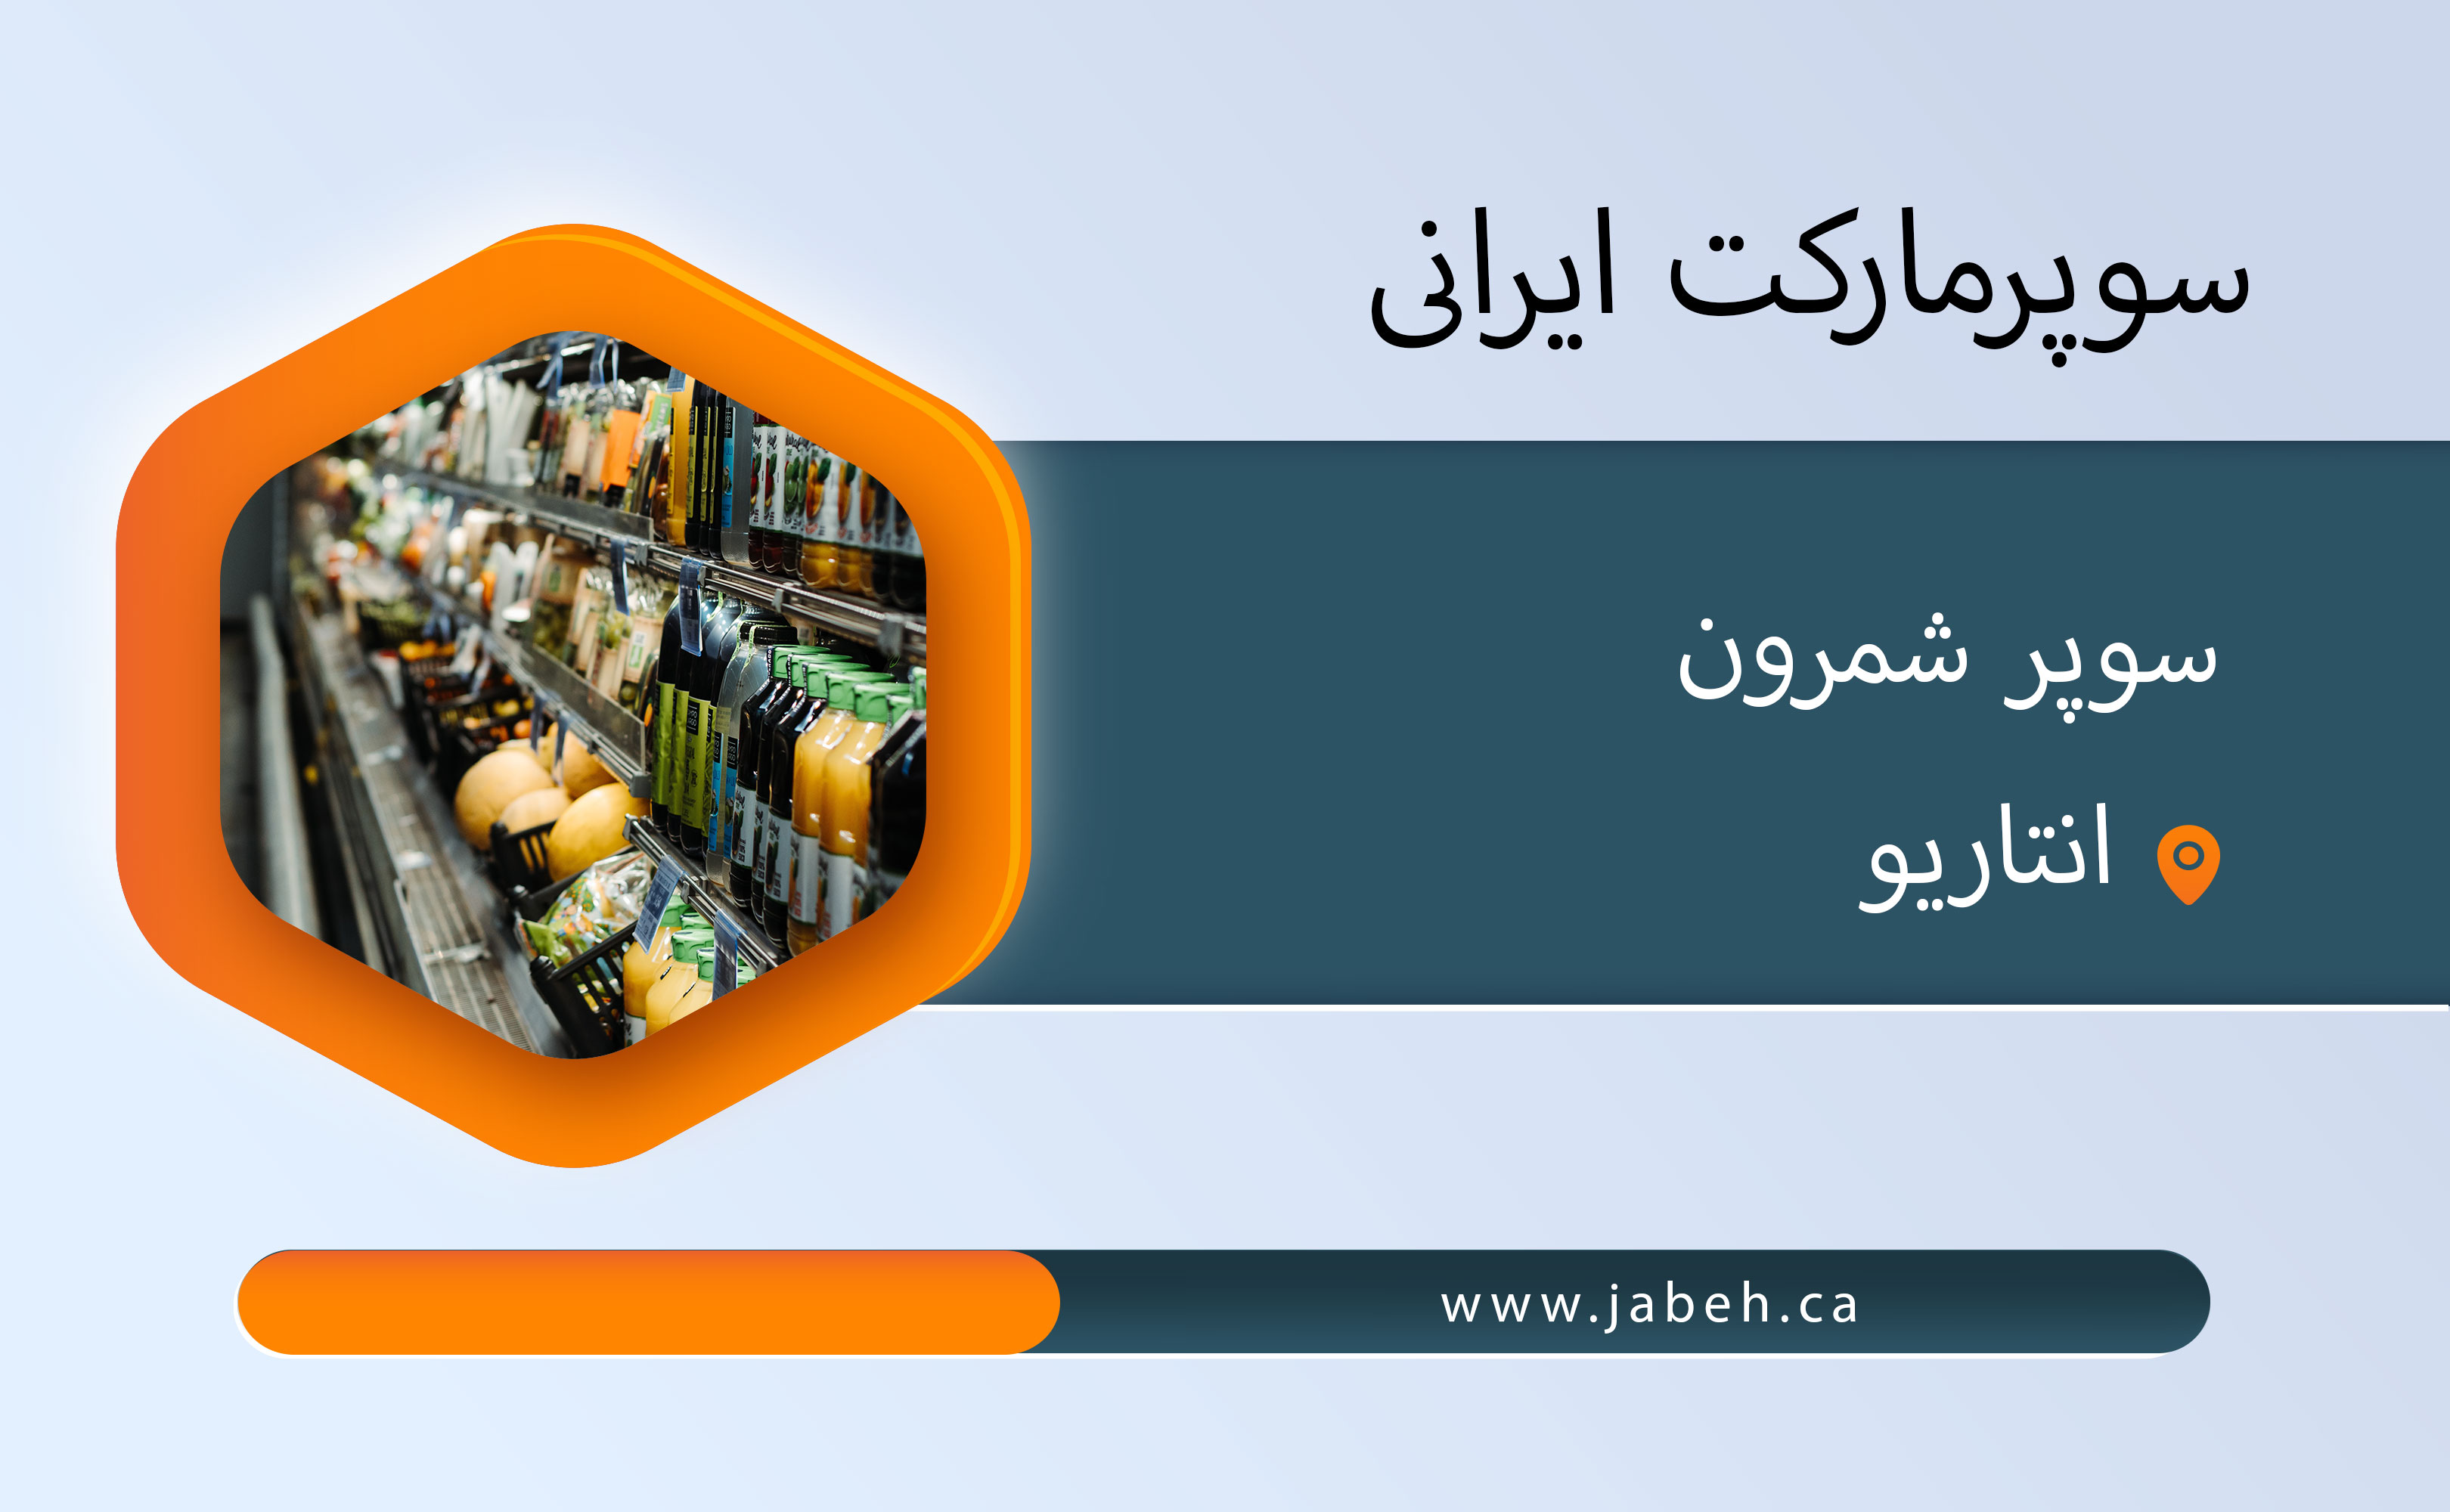 Shimron Iranian supermarket in Ontario